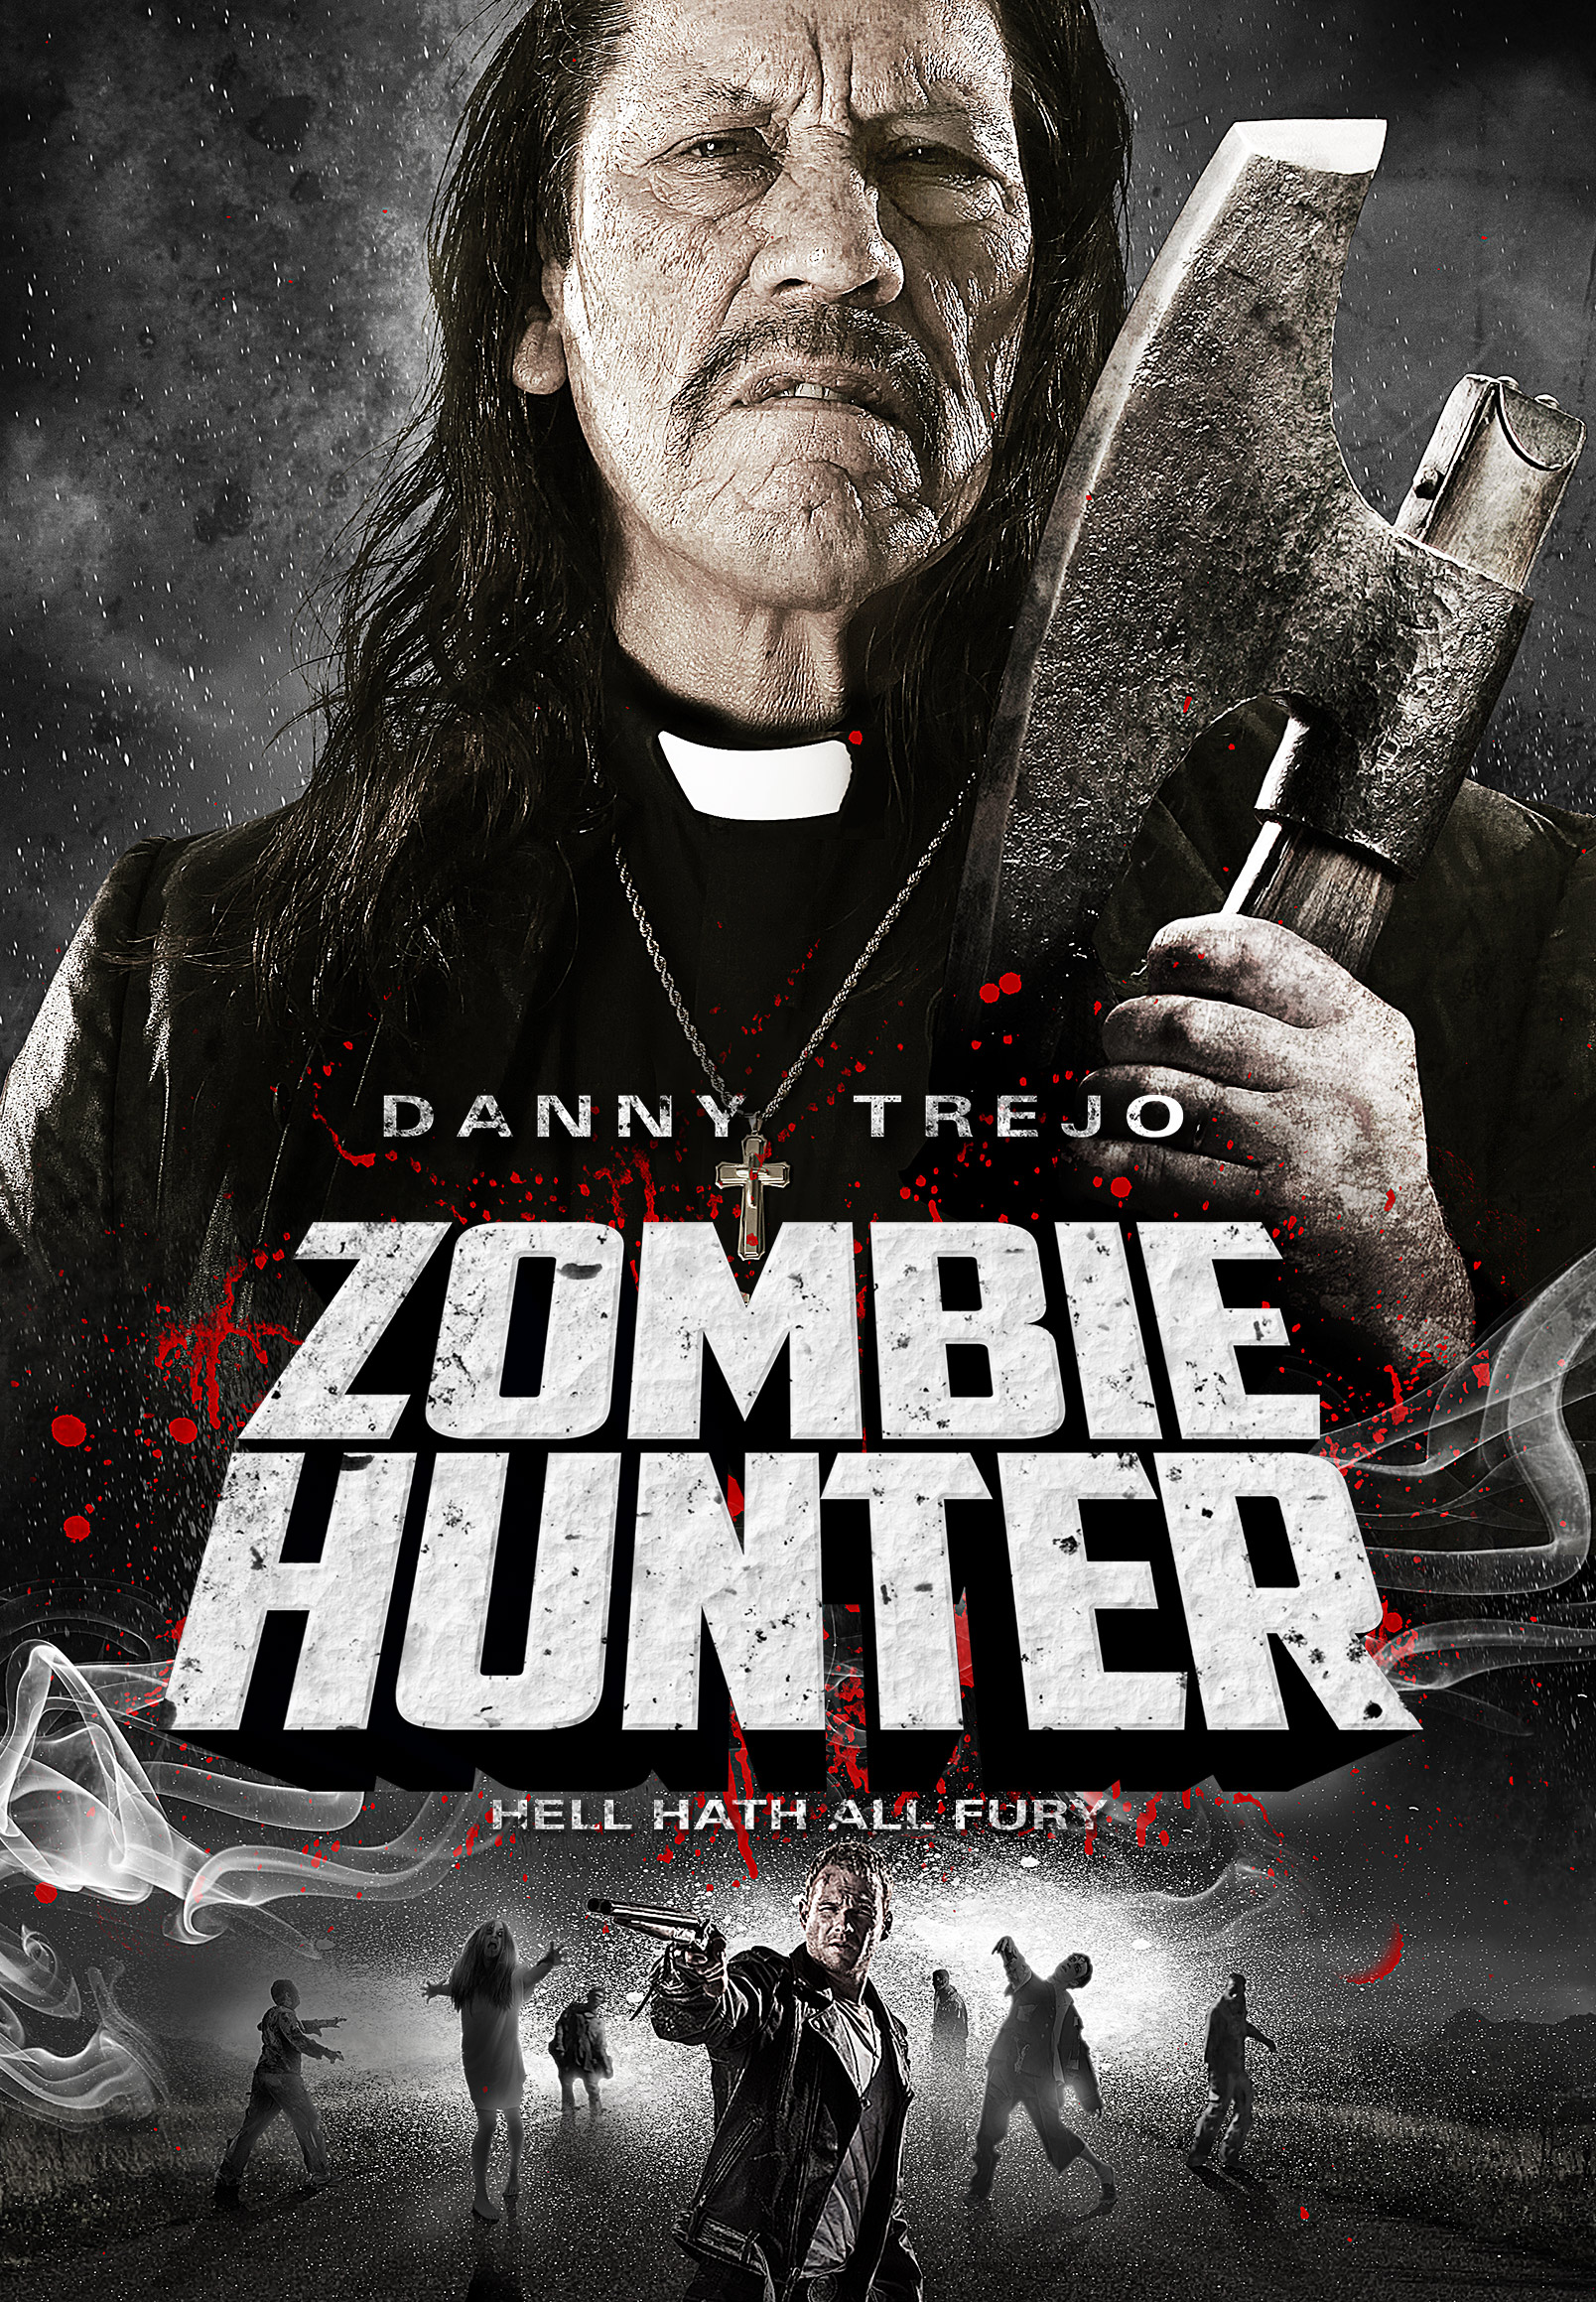 Danny Trejo and Martin Copping in Zombie Hunter (2013)